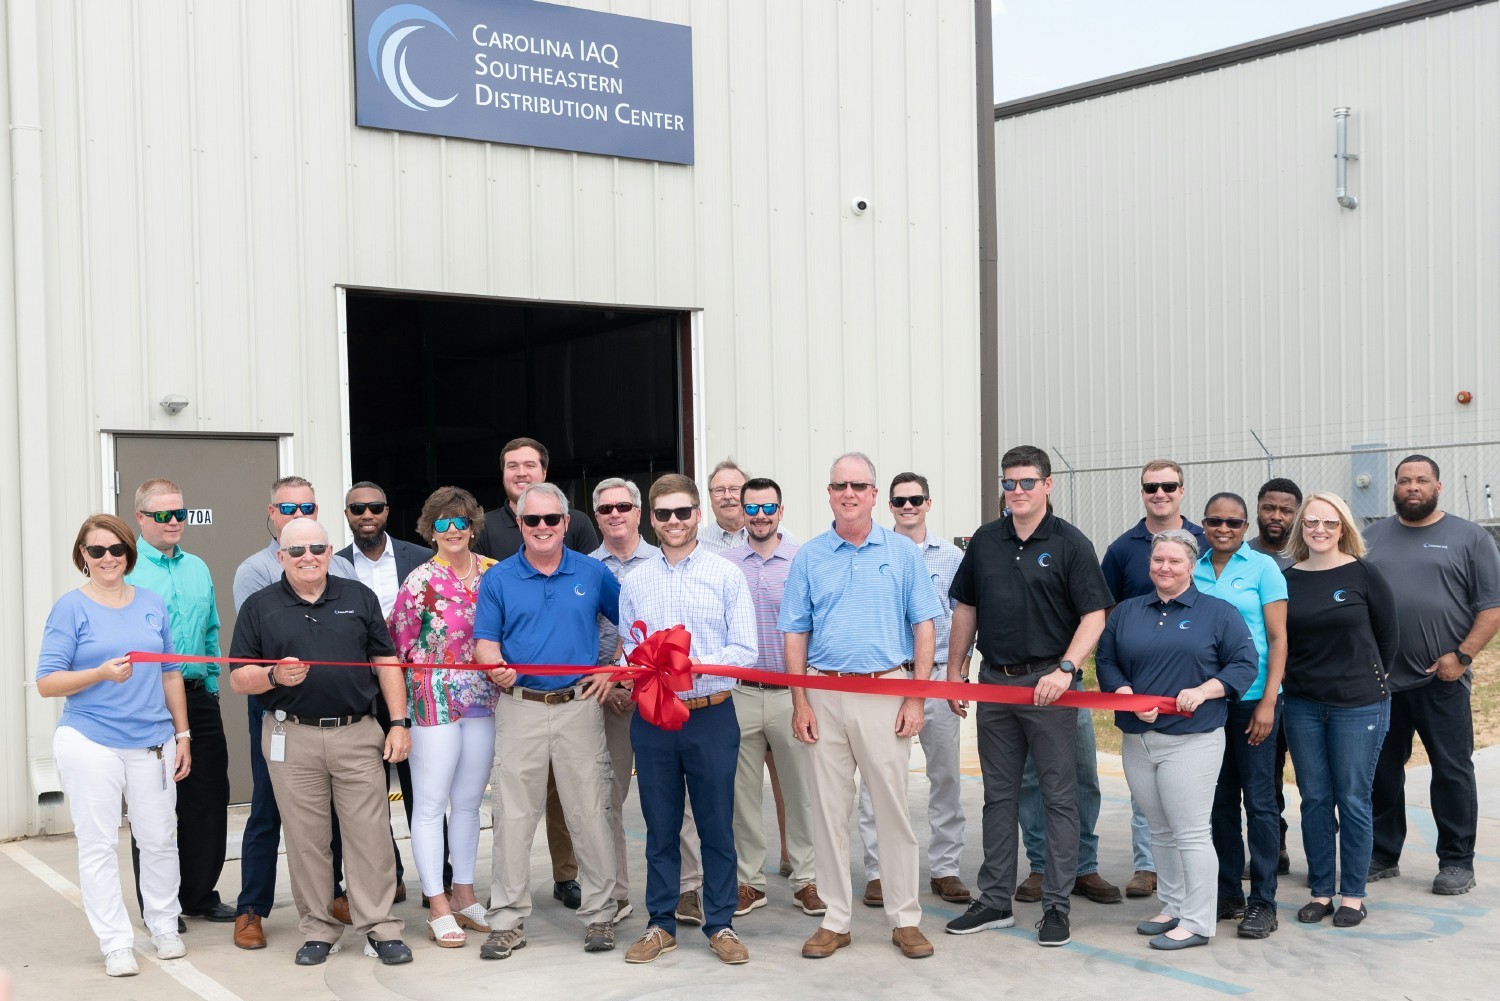 2023 Ribbon Cutting for Carolina IAQ's Southeastern Distribution Center, servicing filtration needs in GA, SC & FL
